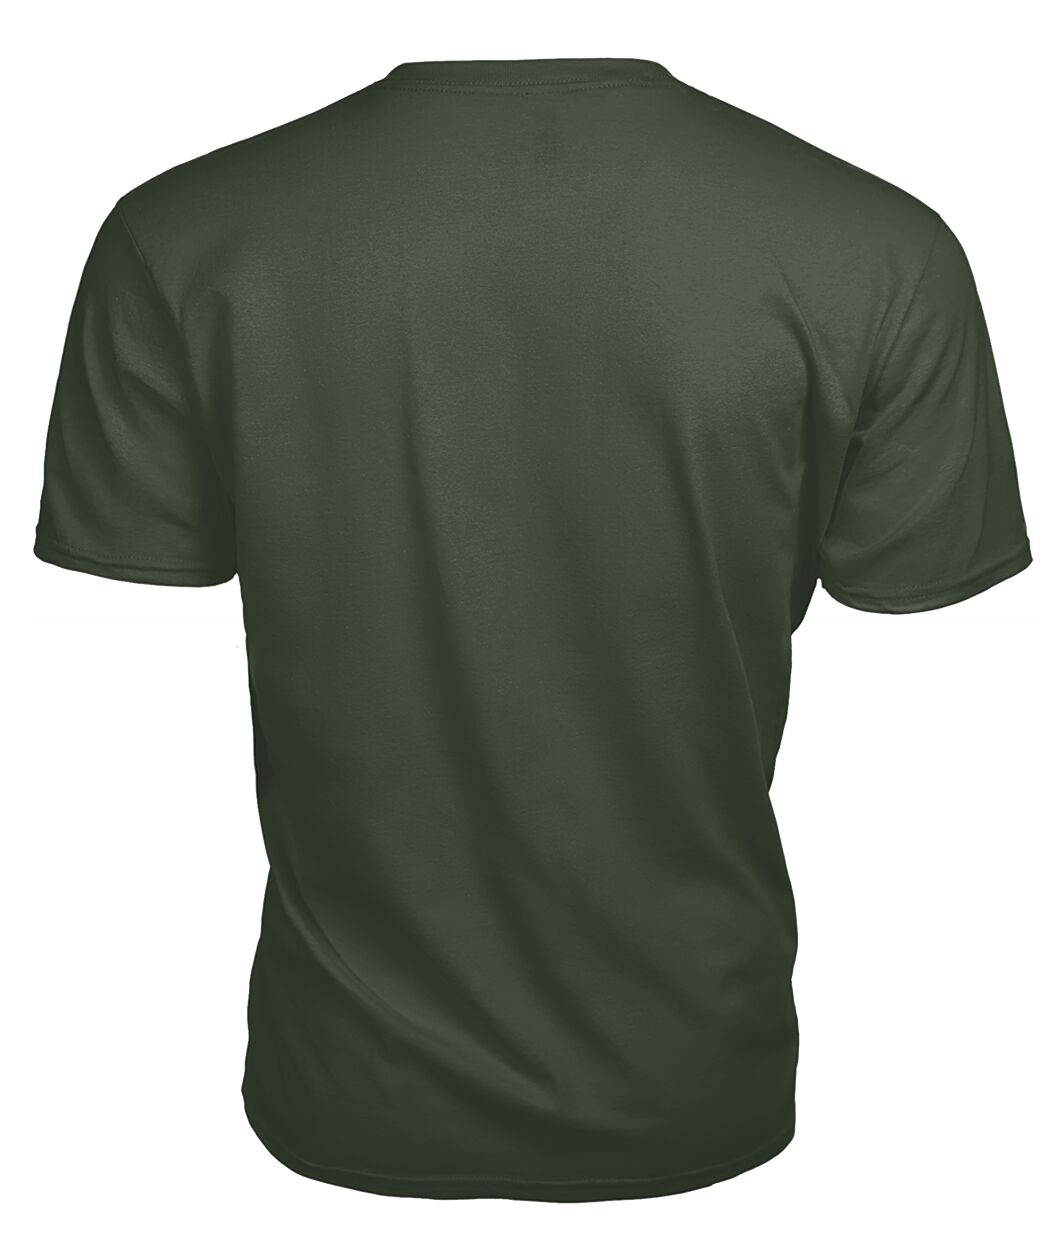 Kinninmont Family Tartan - 2D T-shirt